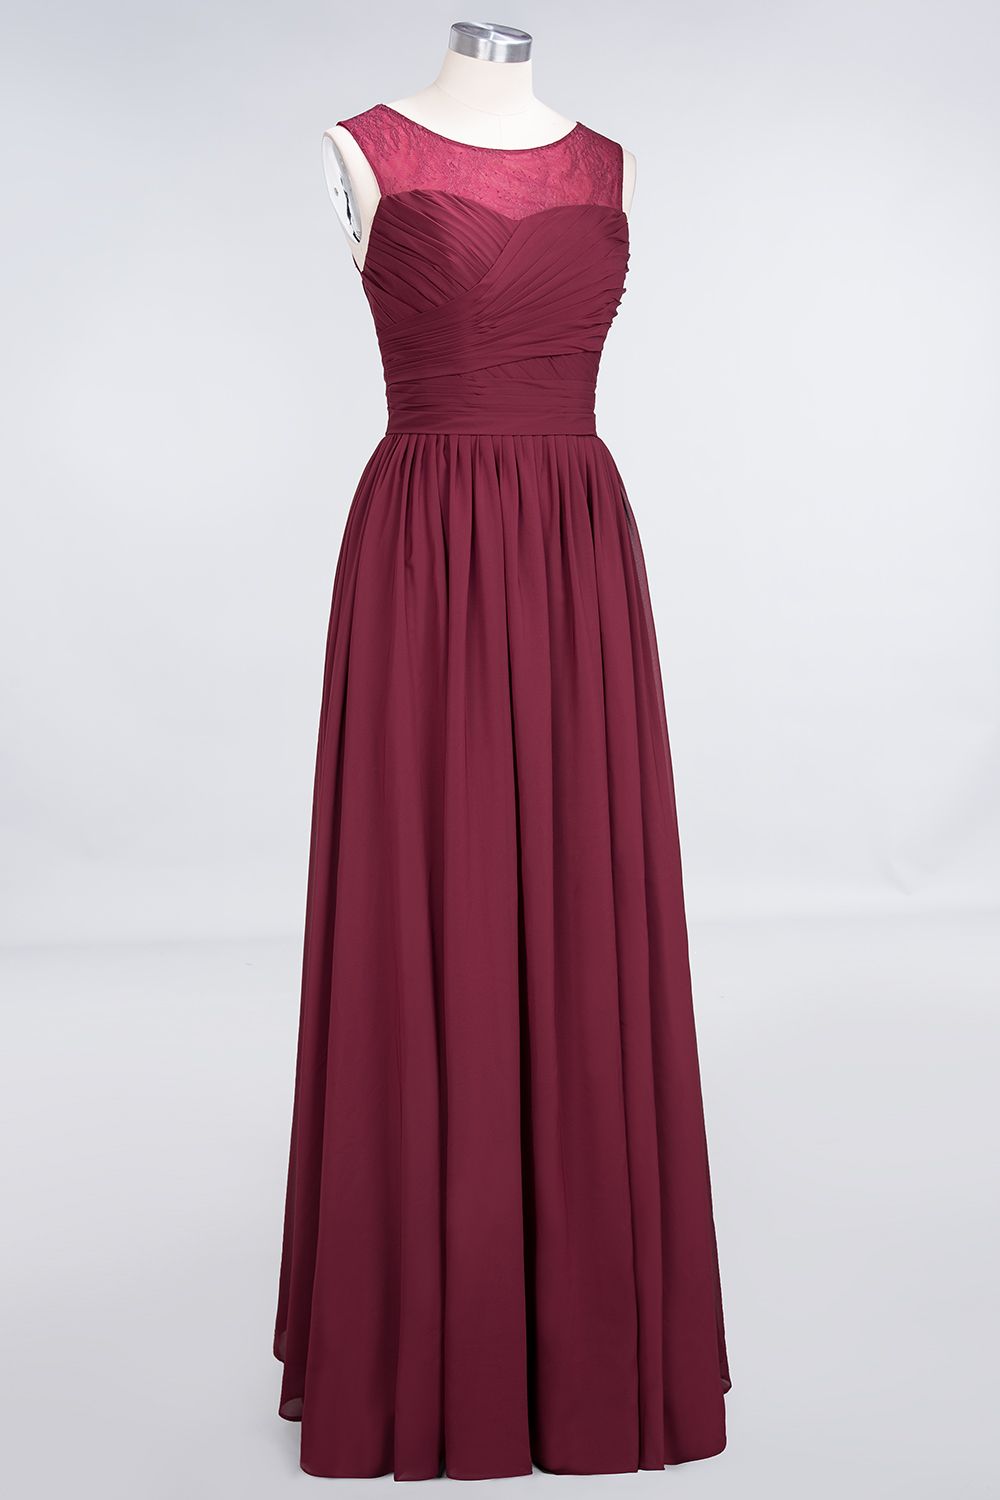 Burgundy Long A-Line Chiffon Tulle Lace Bridesmaid Dress with Ruffle-BIZTUNNEL